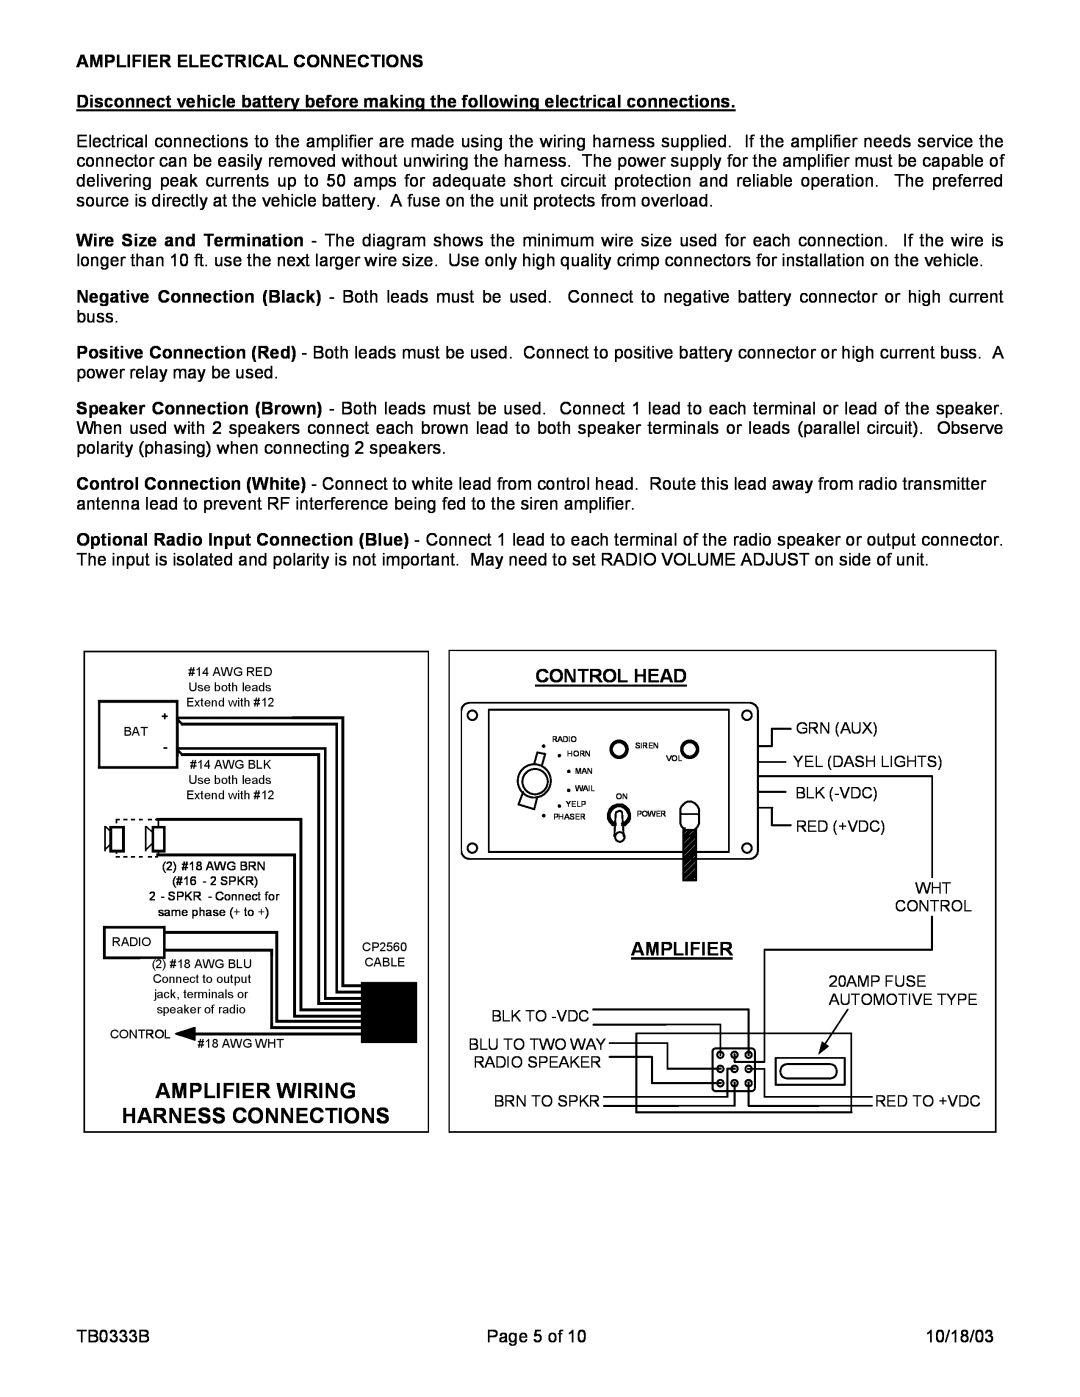 Carson SA-430-73FX, SA-430-73V manual Amplifier Wiring Harness Connections, Control Head 